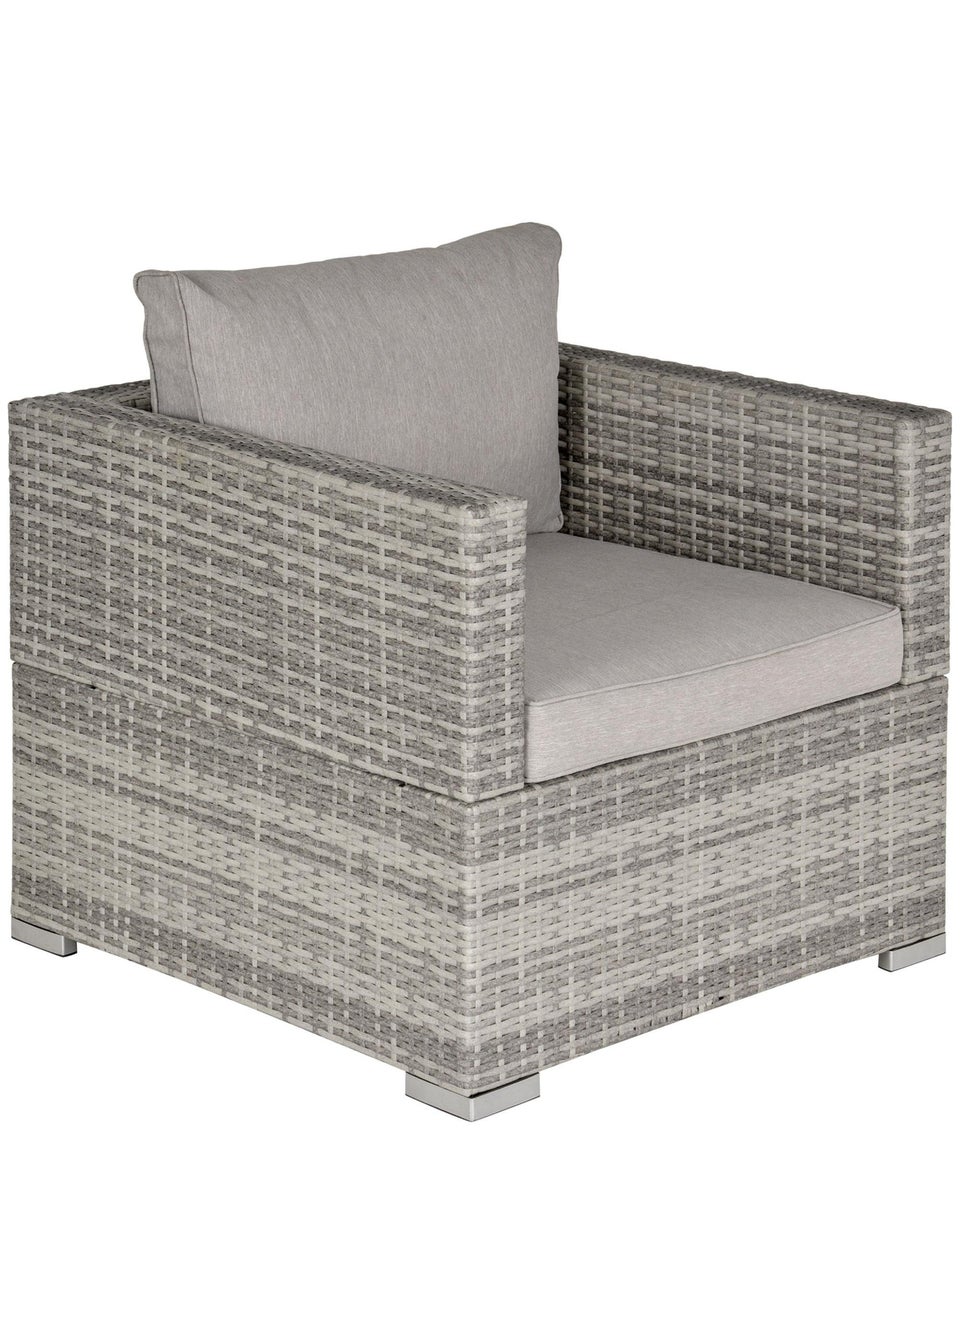 Outsunny Single Seater Rattan Chair Sofa - Grey